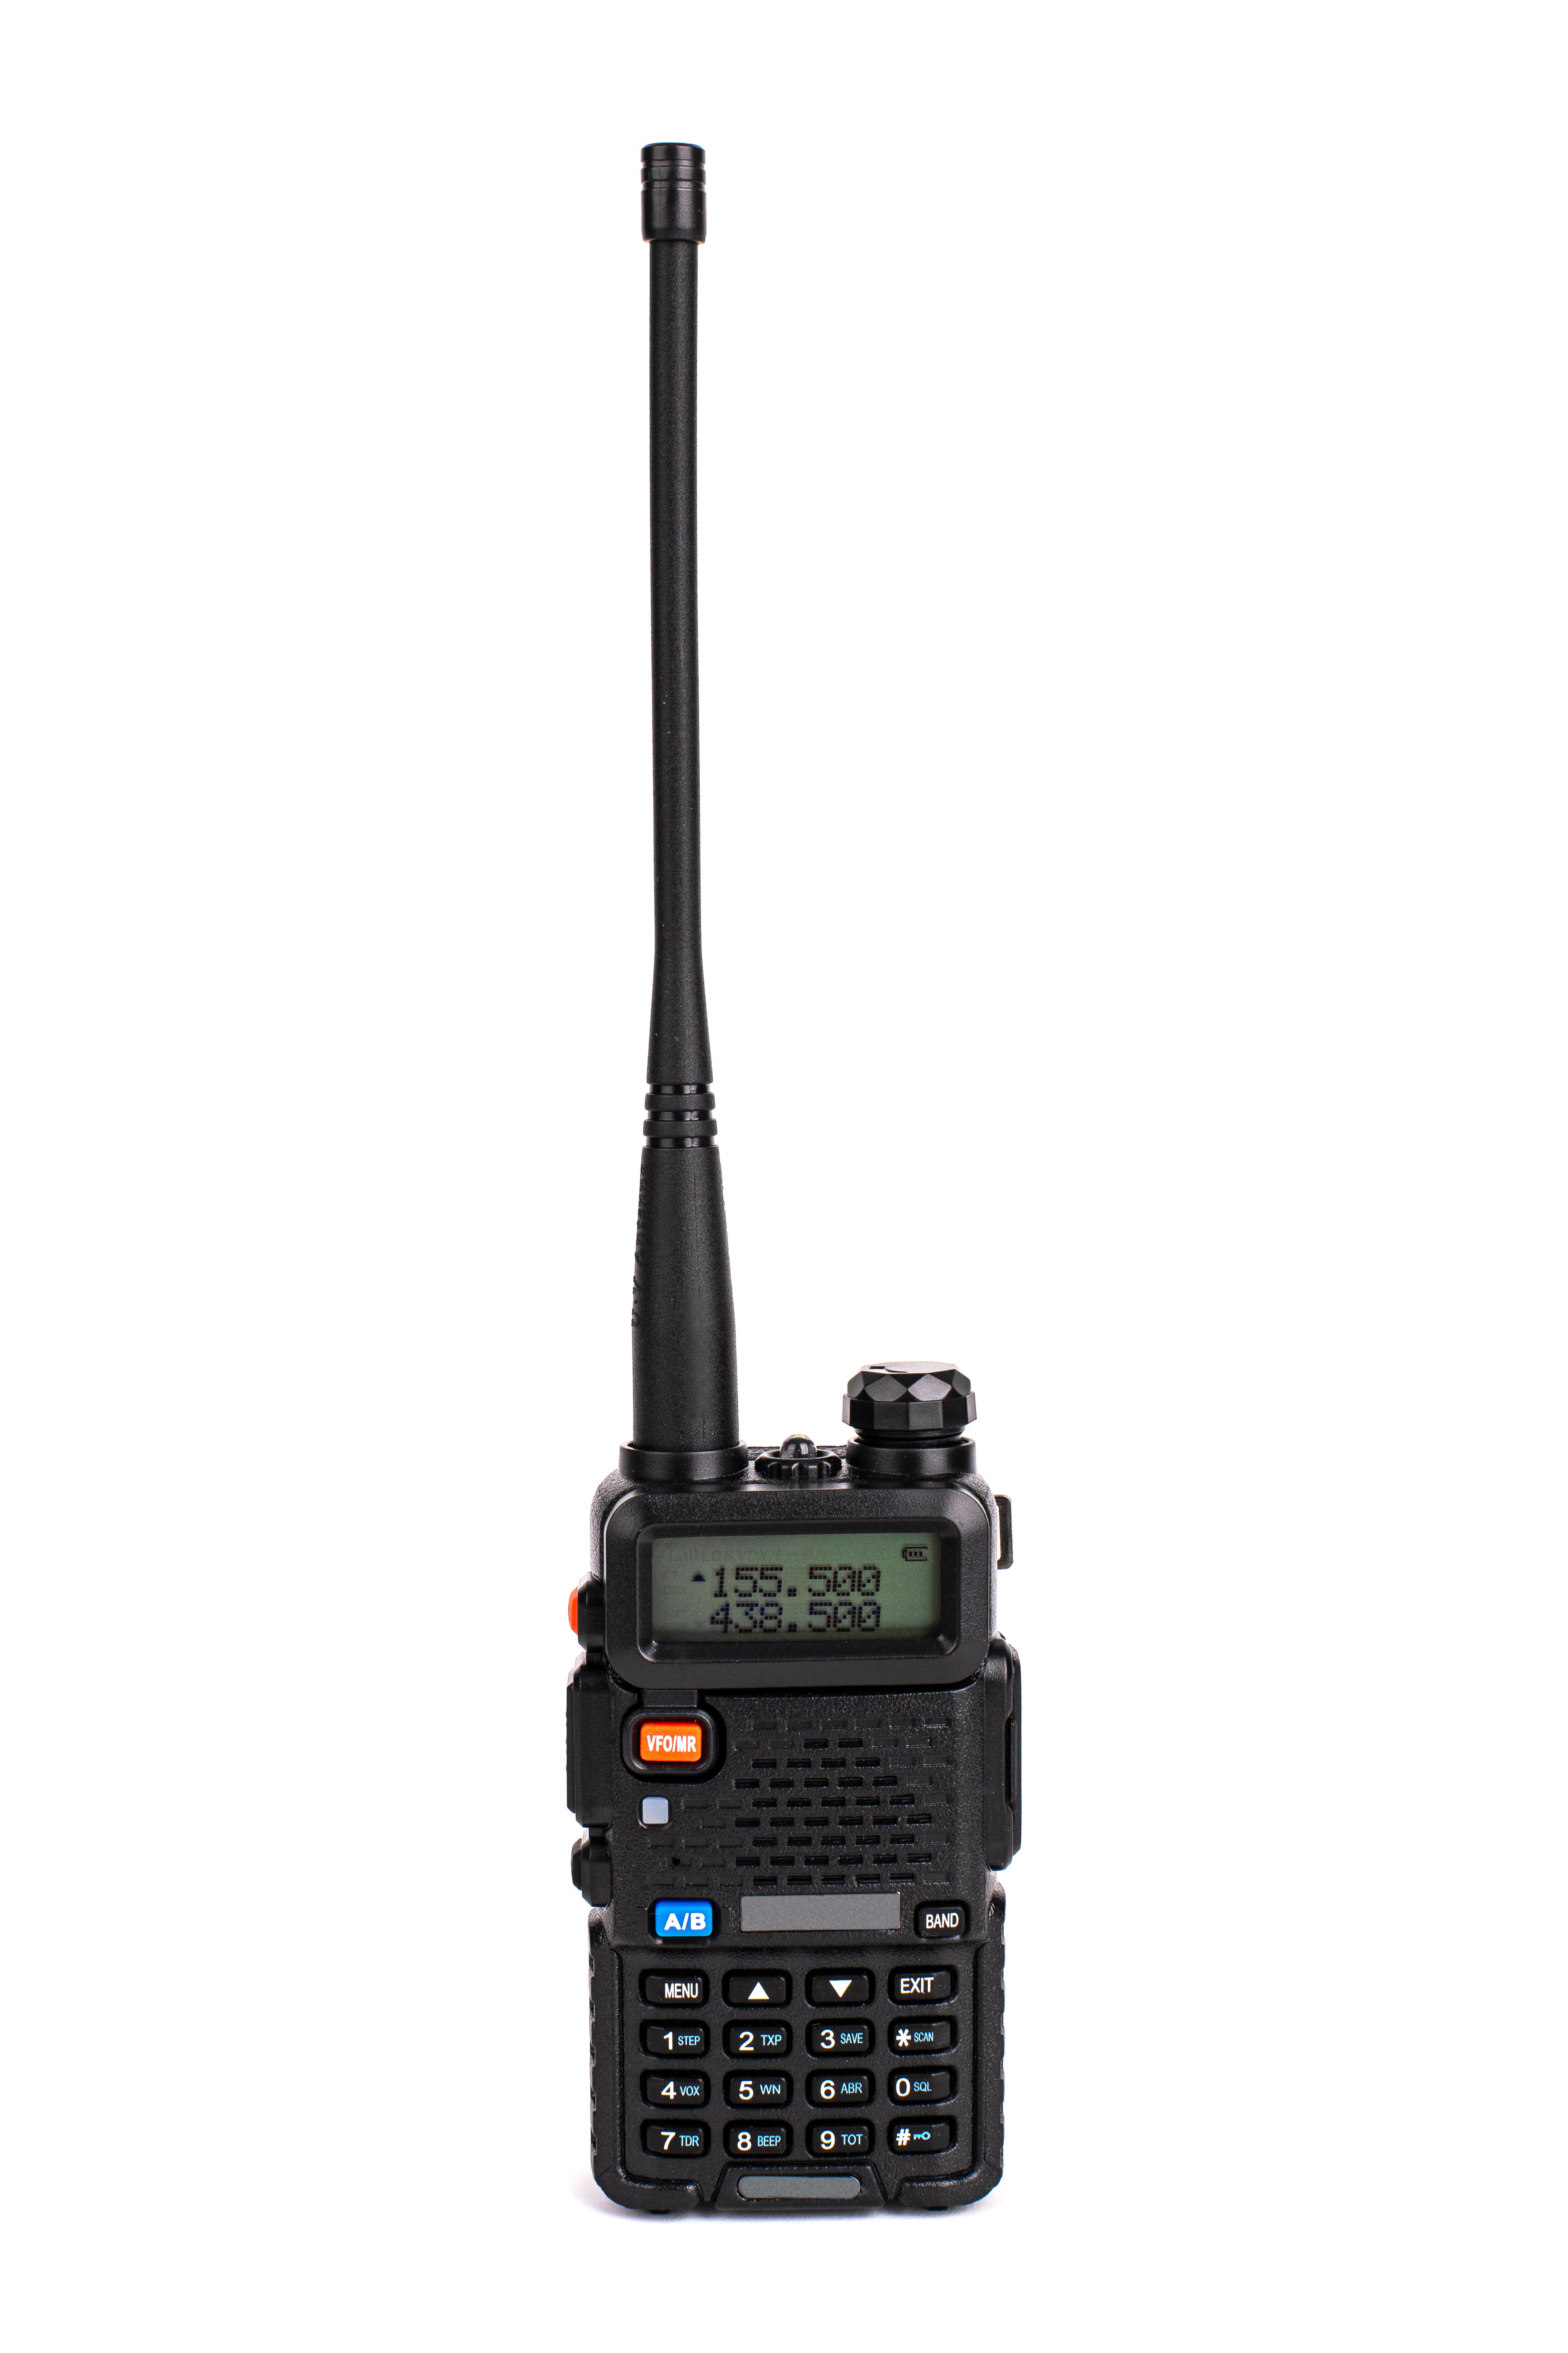 Handheld two-way radio with antenna and digital display